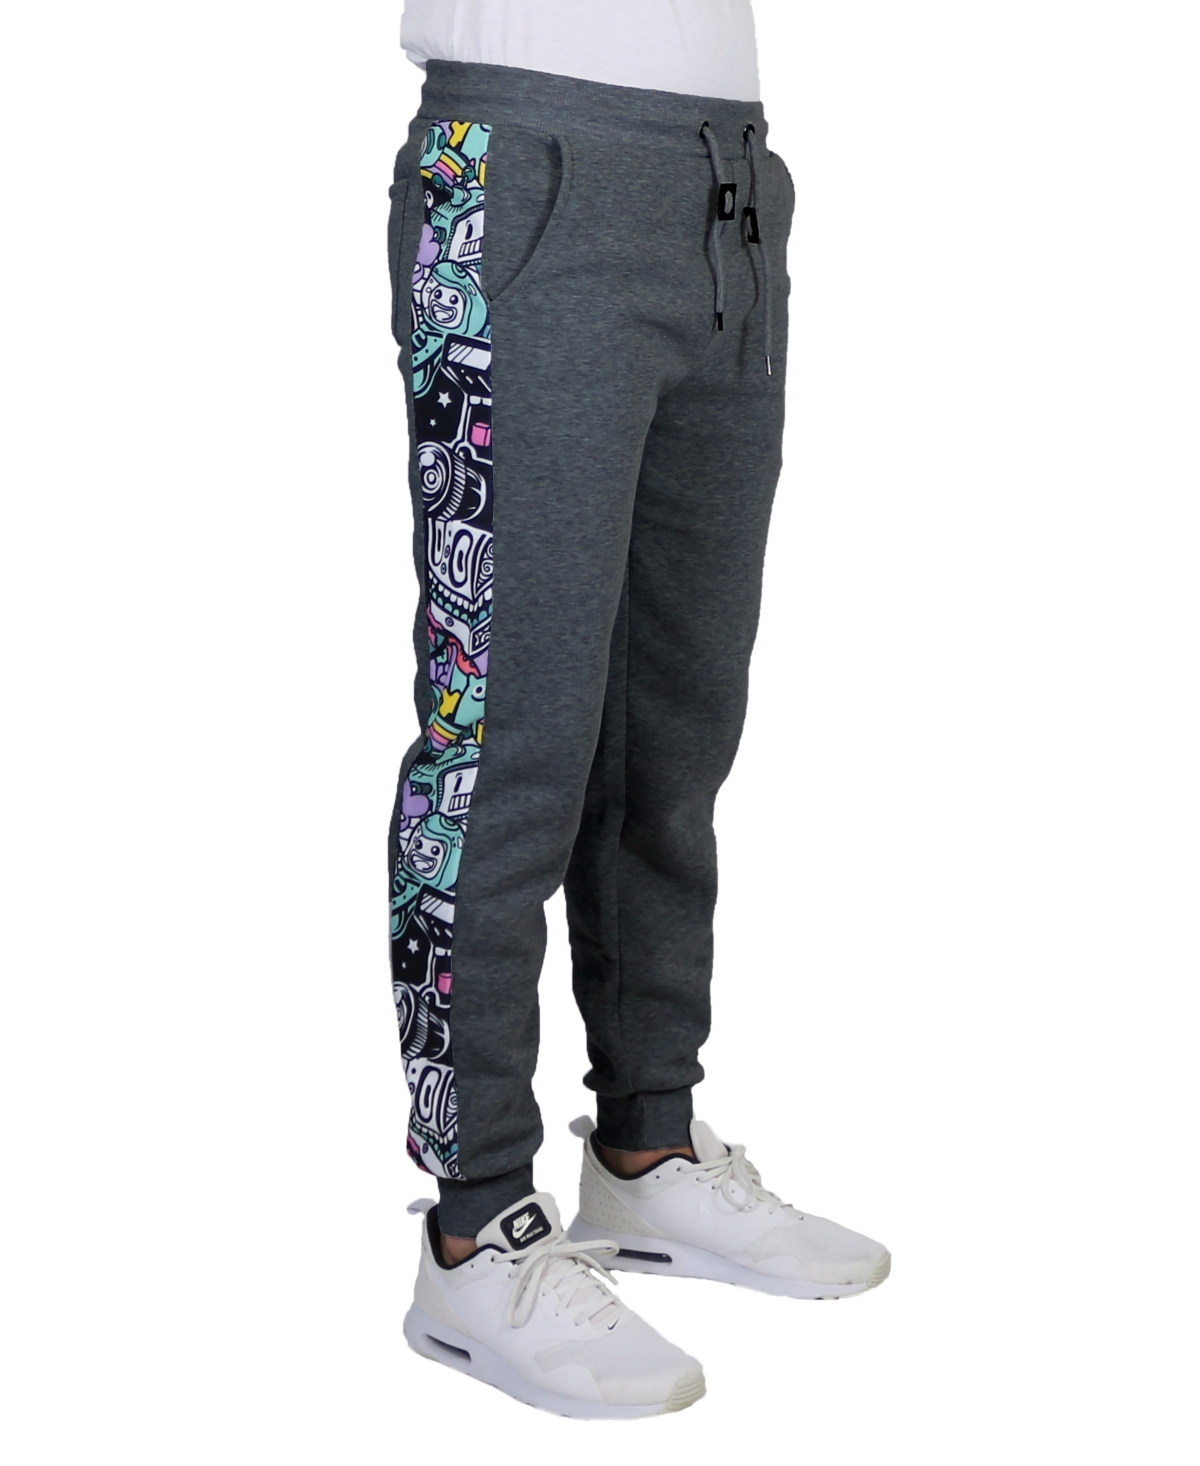 Men's Fleece-Lined Jogger Sweatpants with Contrast Trim Design - Charcoal